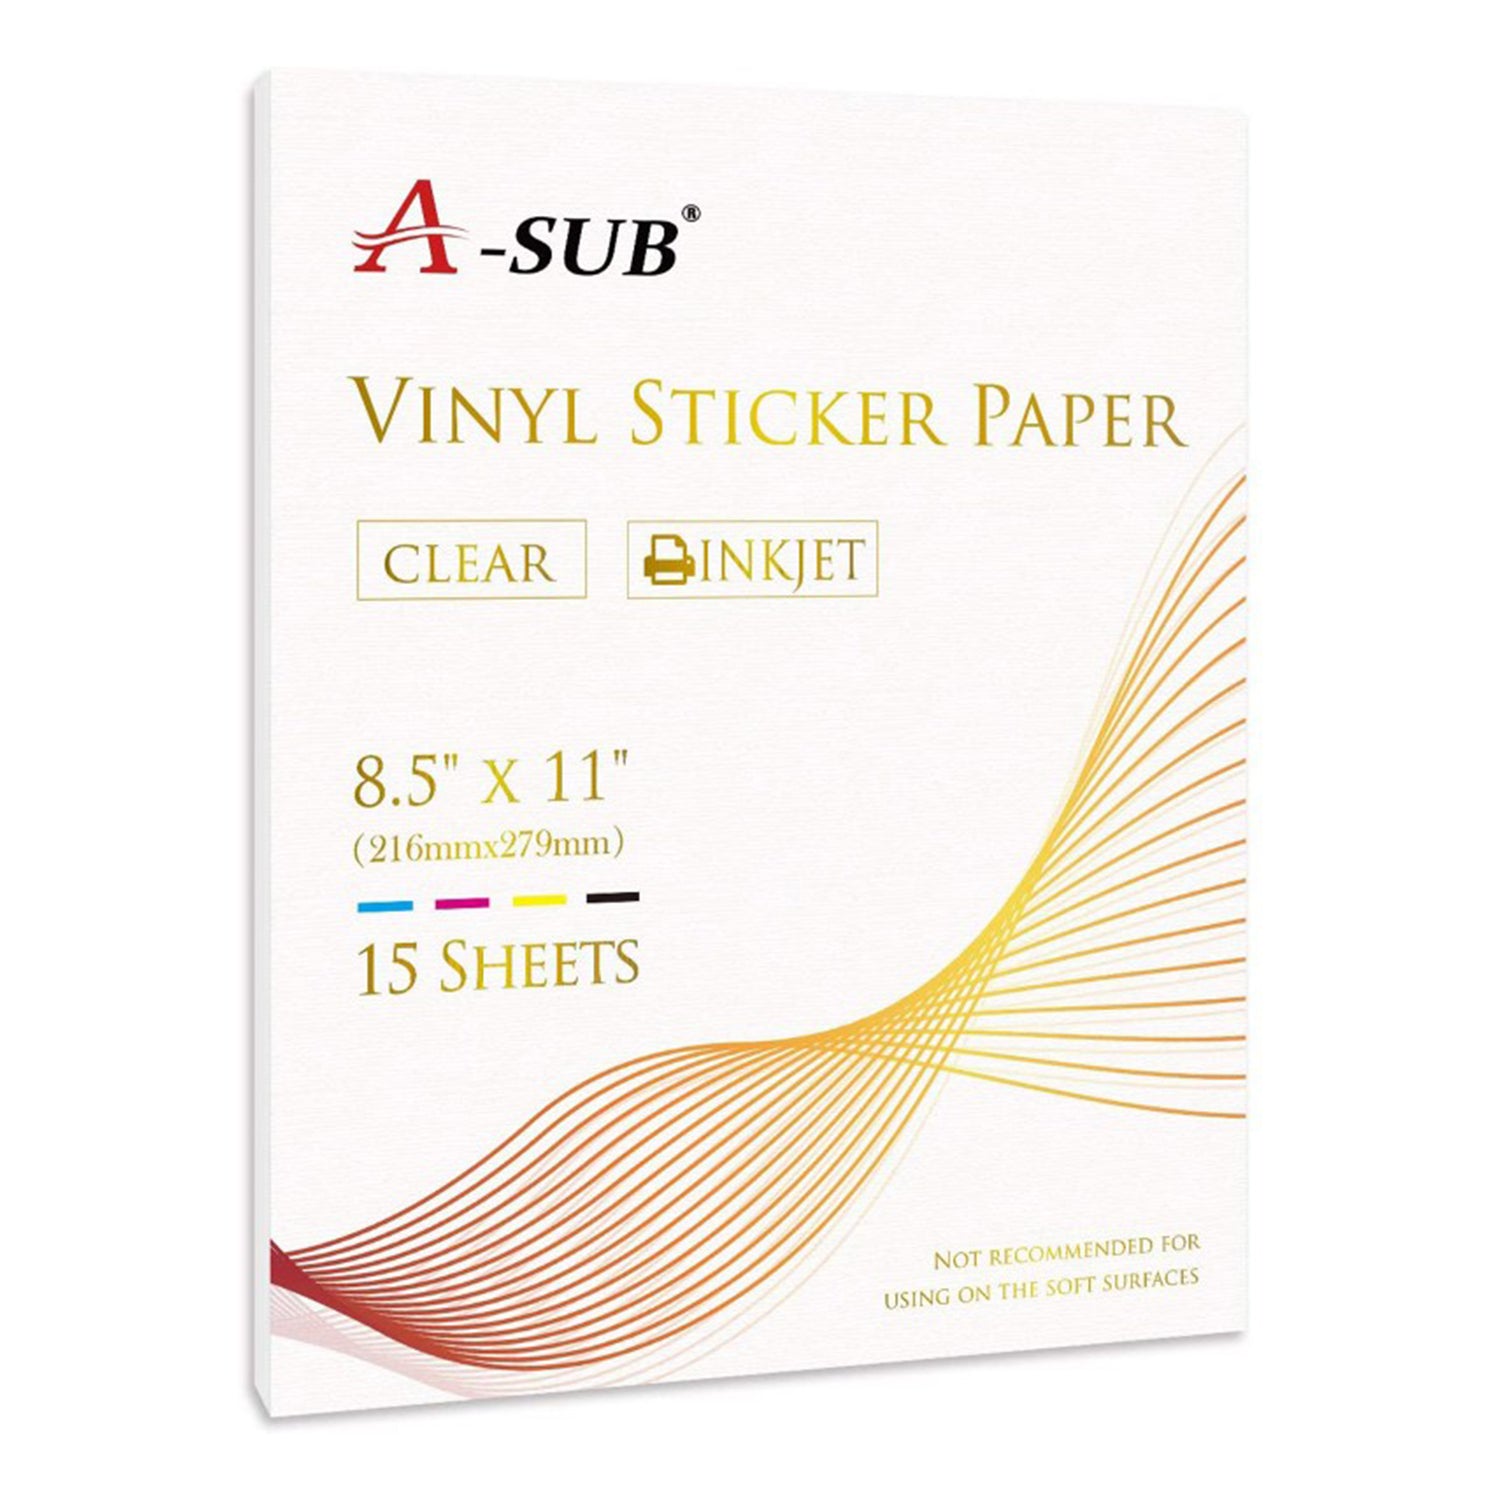 8.5 X 11 CLEAR Gloss Inkjet Printable Sticker Paper 